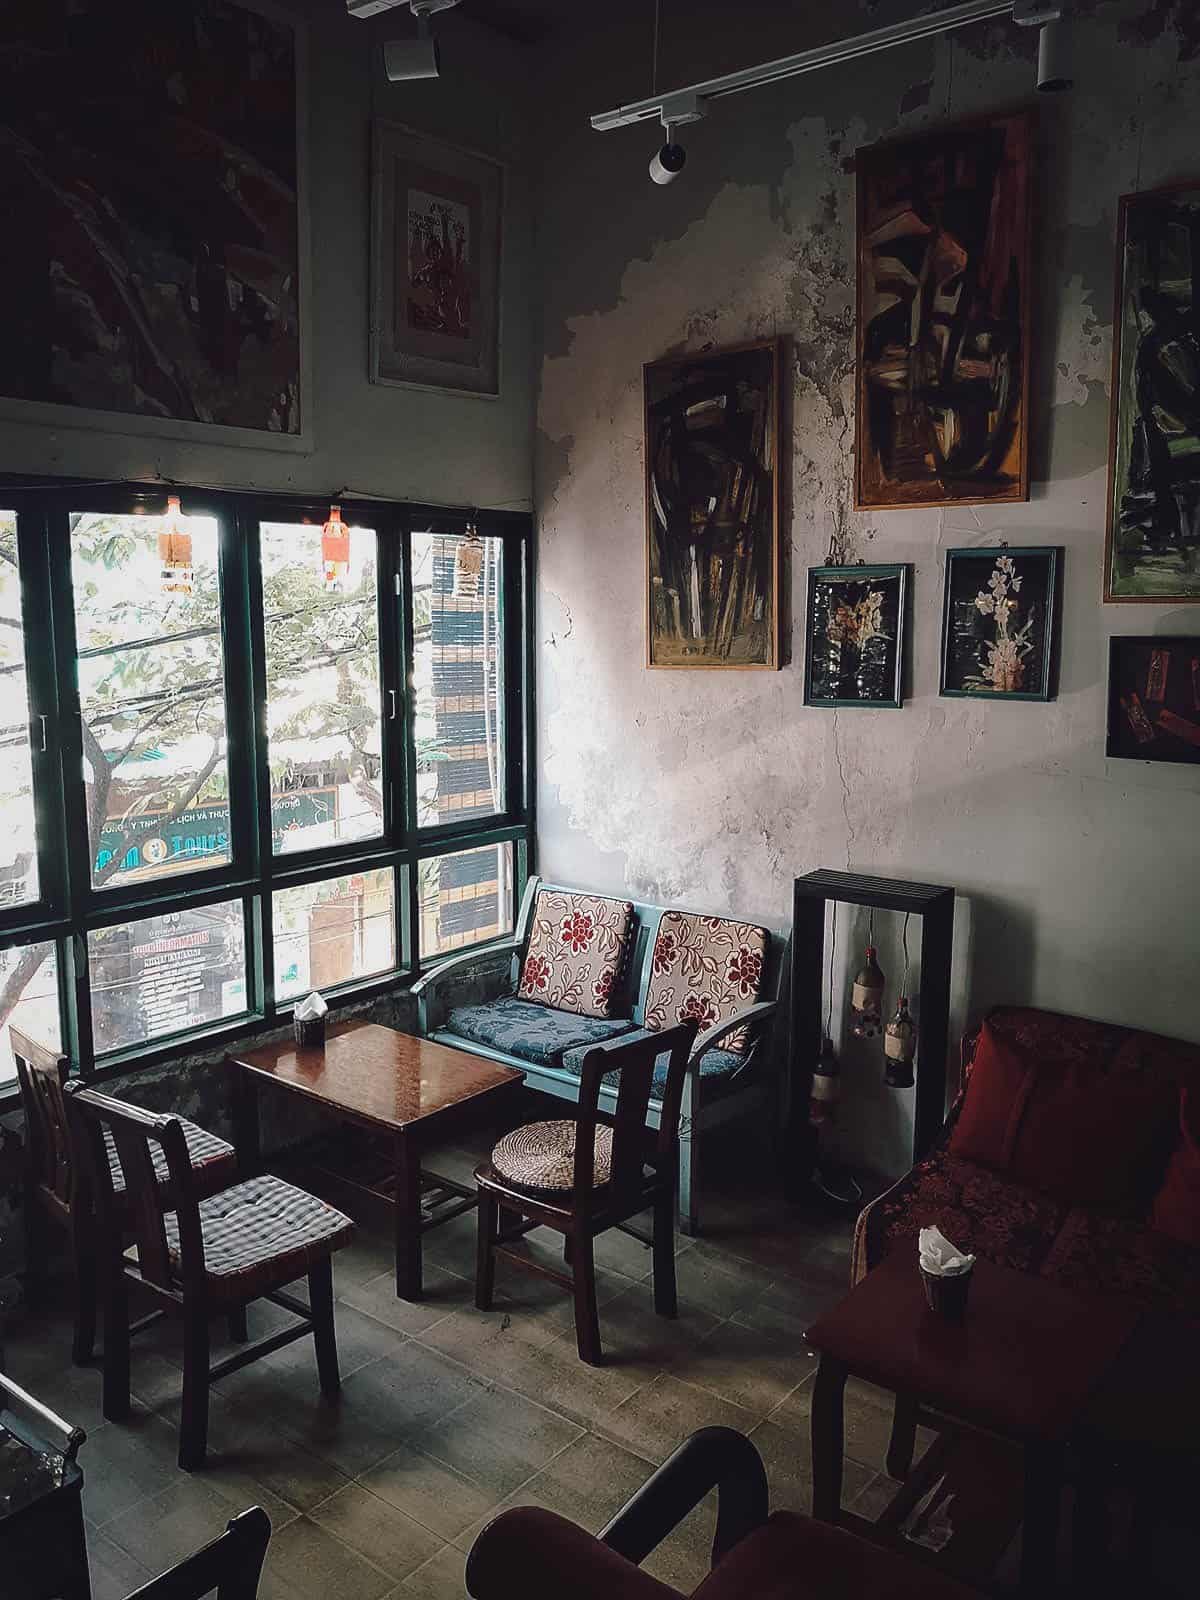 Cafe Nola interior